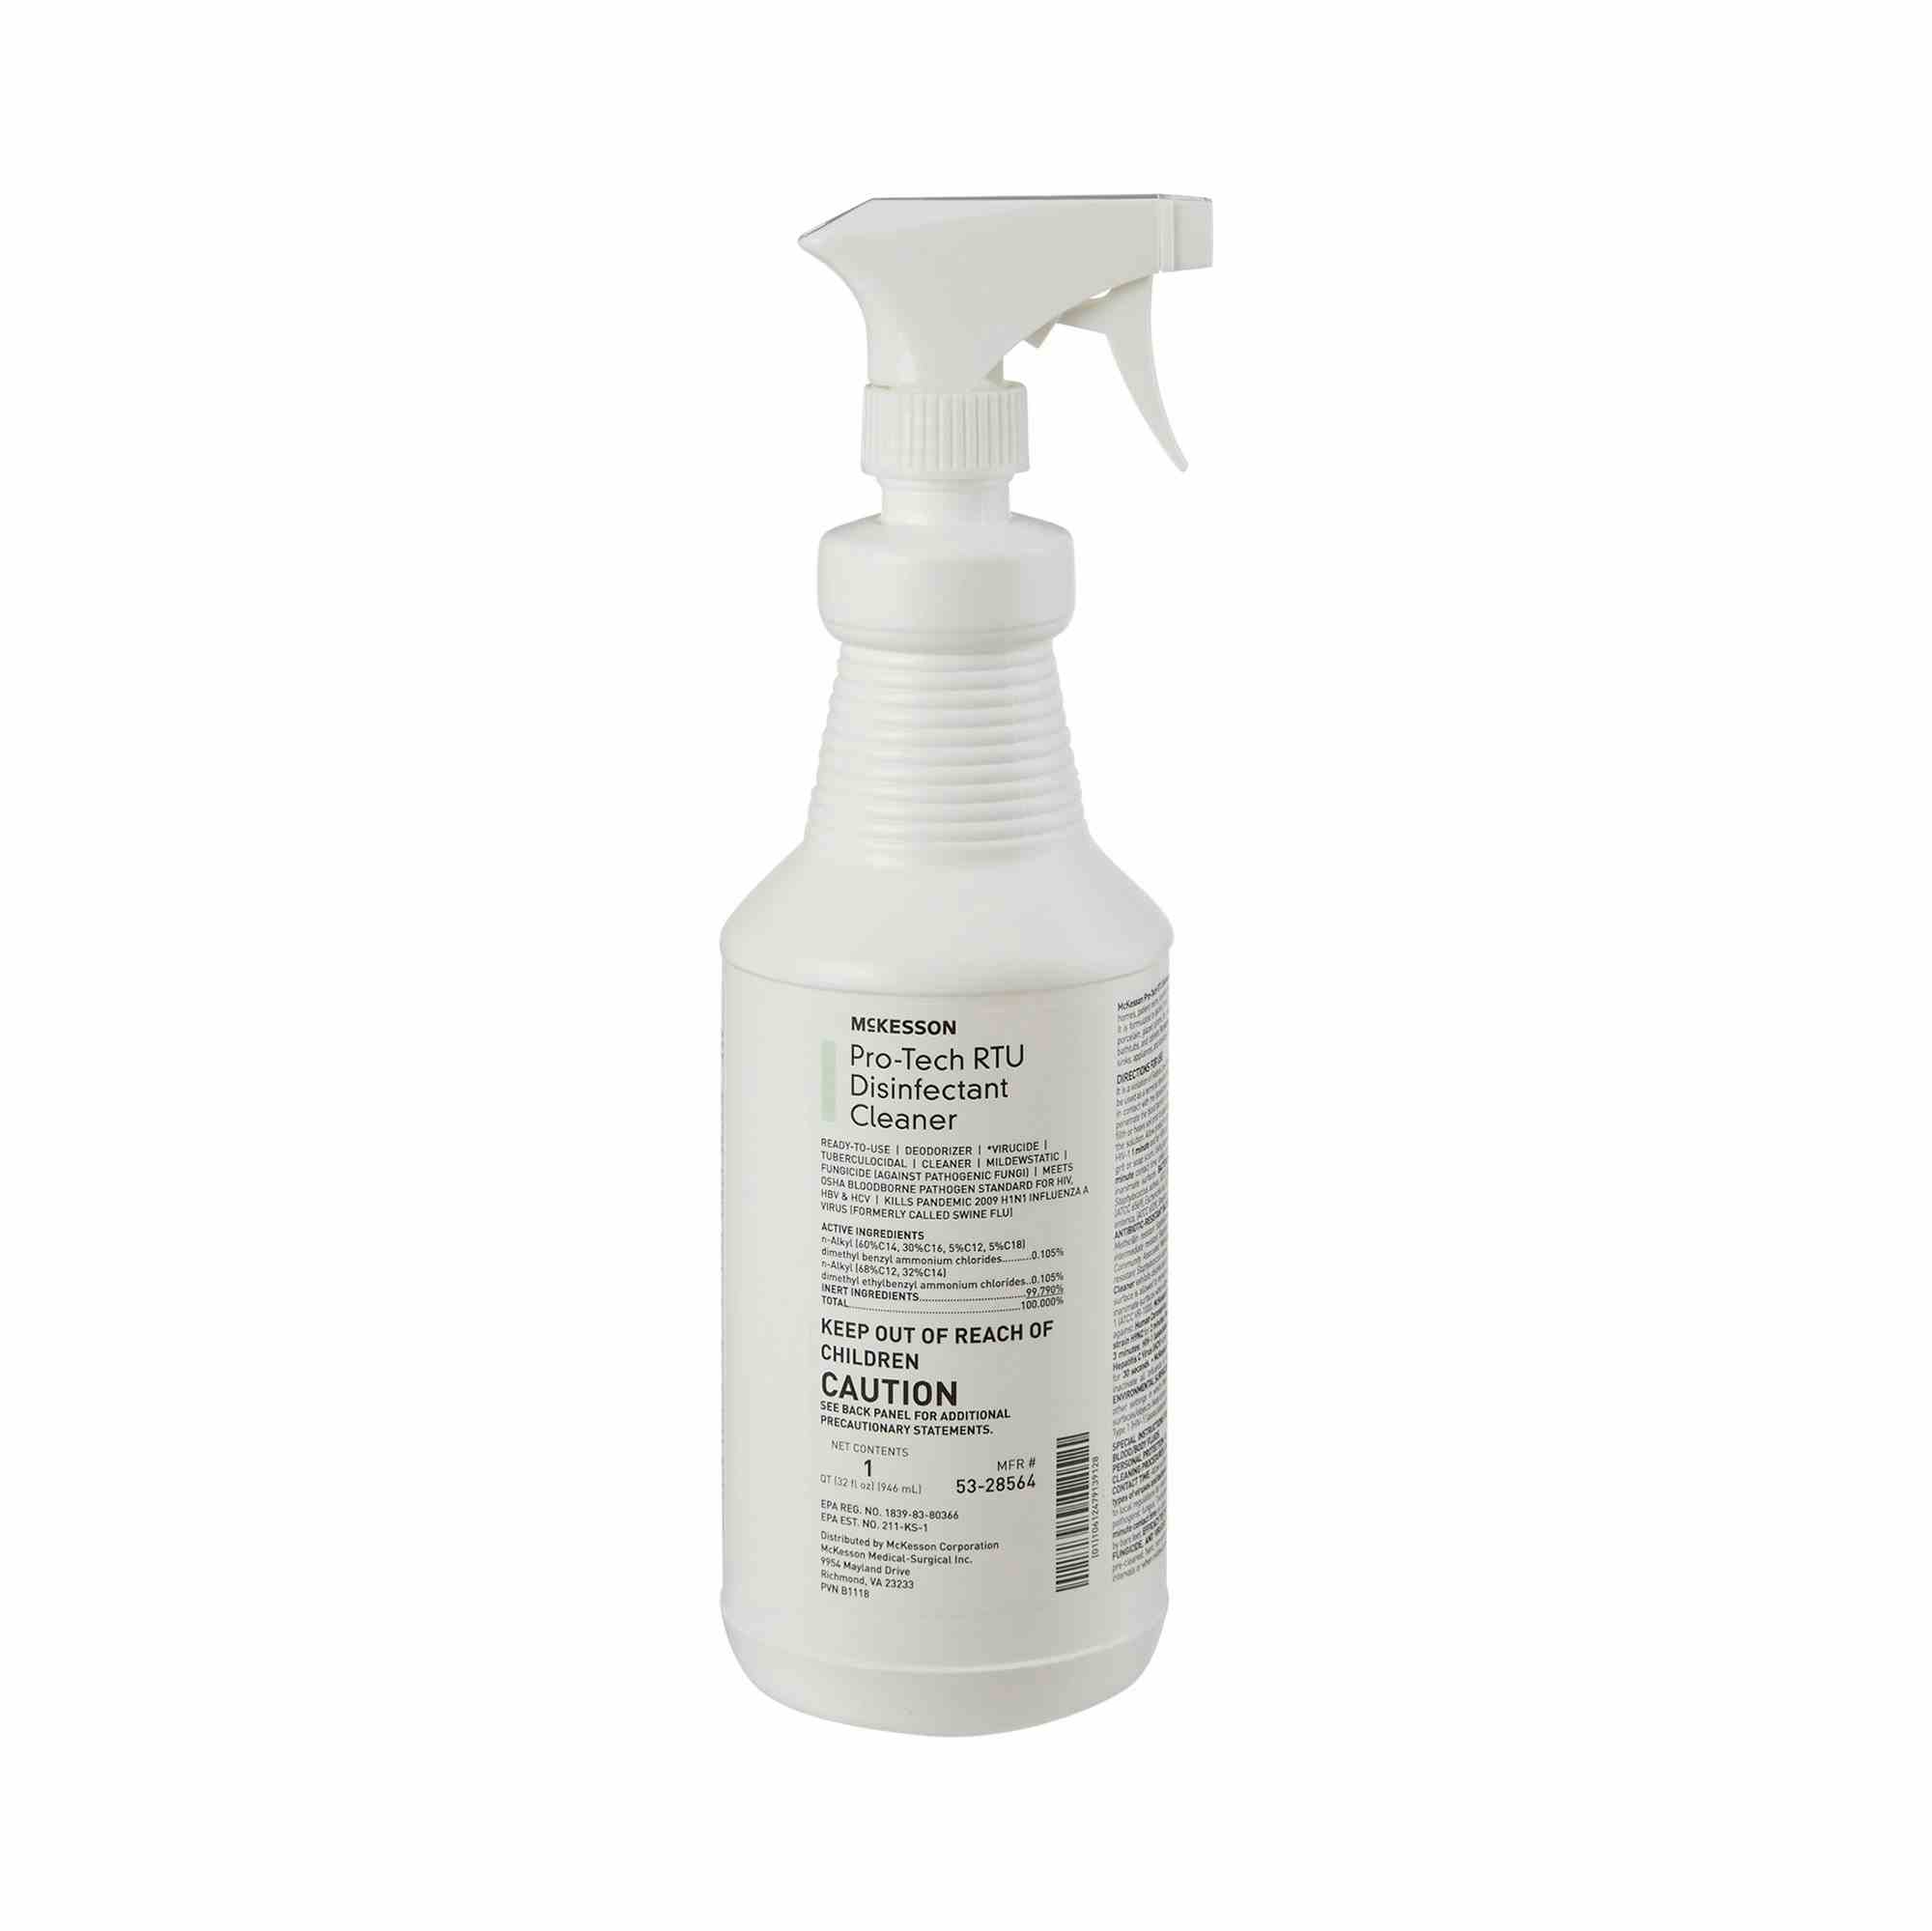 McKesson Pro-Tech RTU Disinfectant Cleaner, 53-28564, 32 oz. - 1 Each